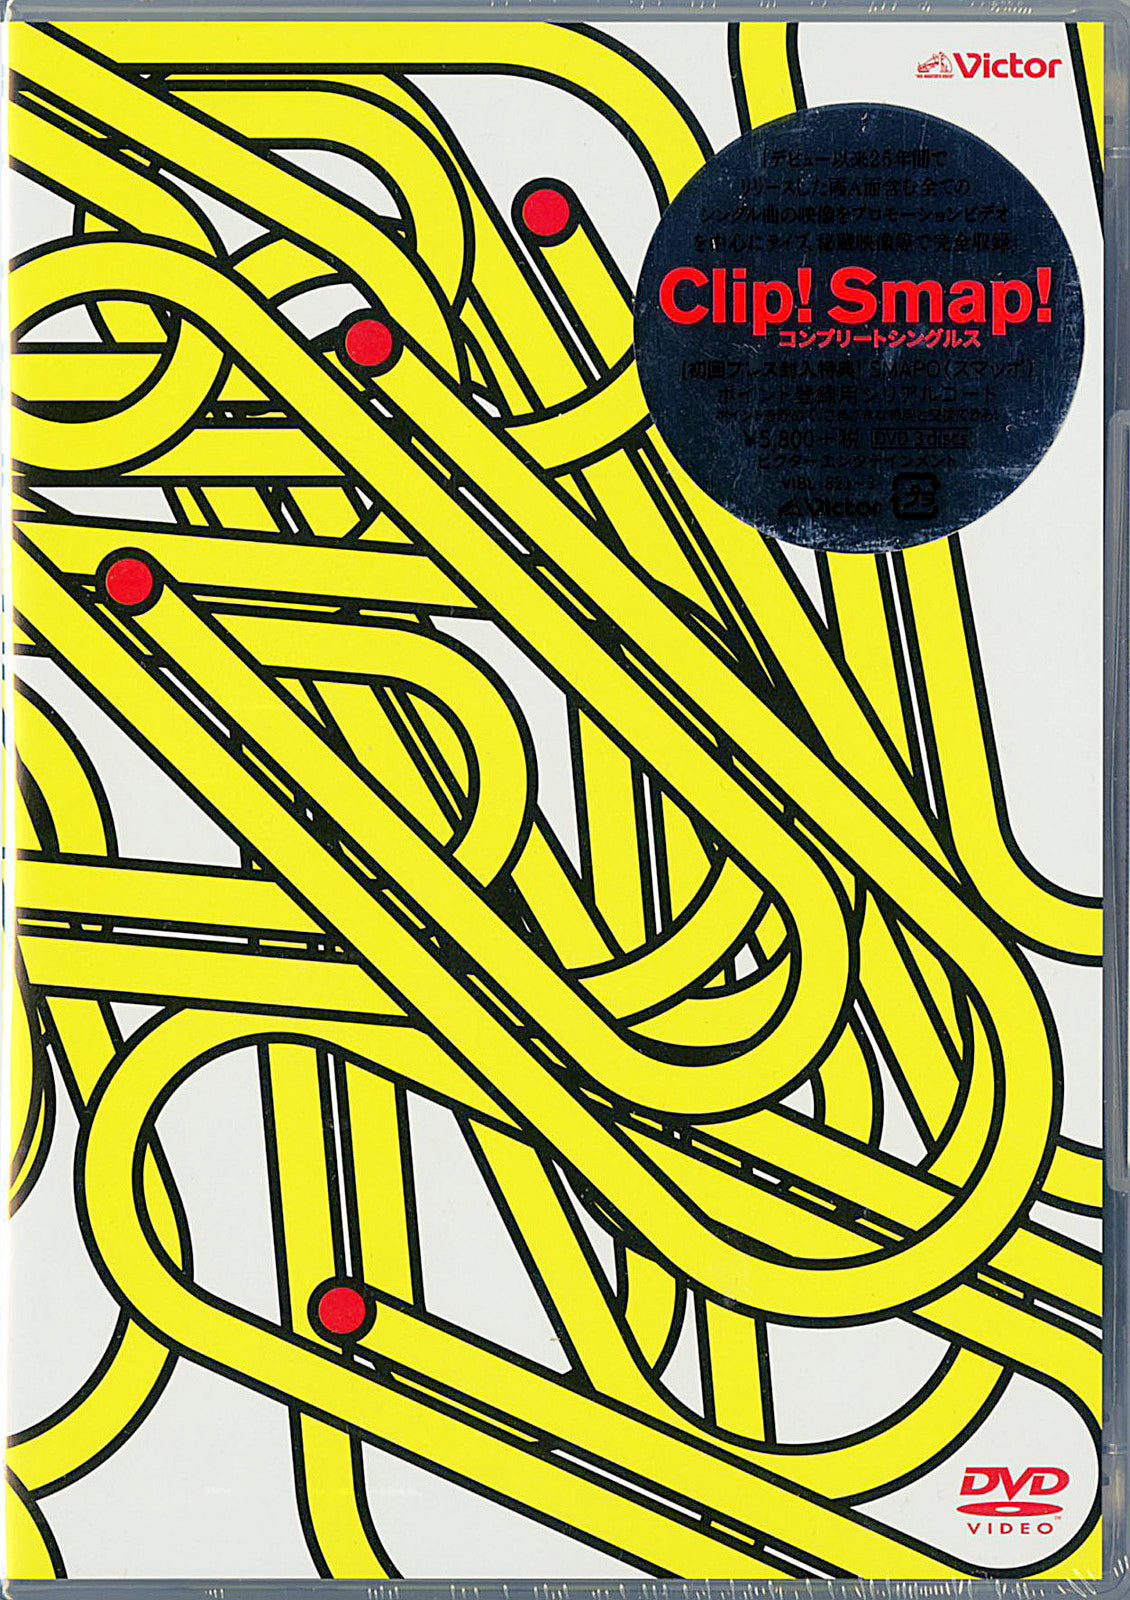 Smap - Clip! Smap! Complete Singles - Japan 3 DVD – CDs Vinyl